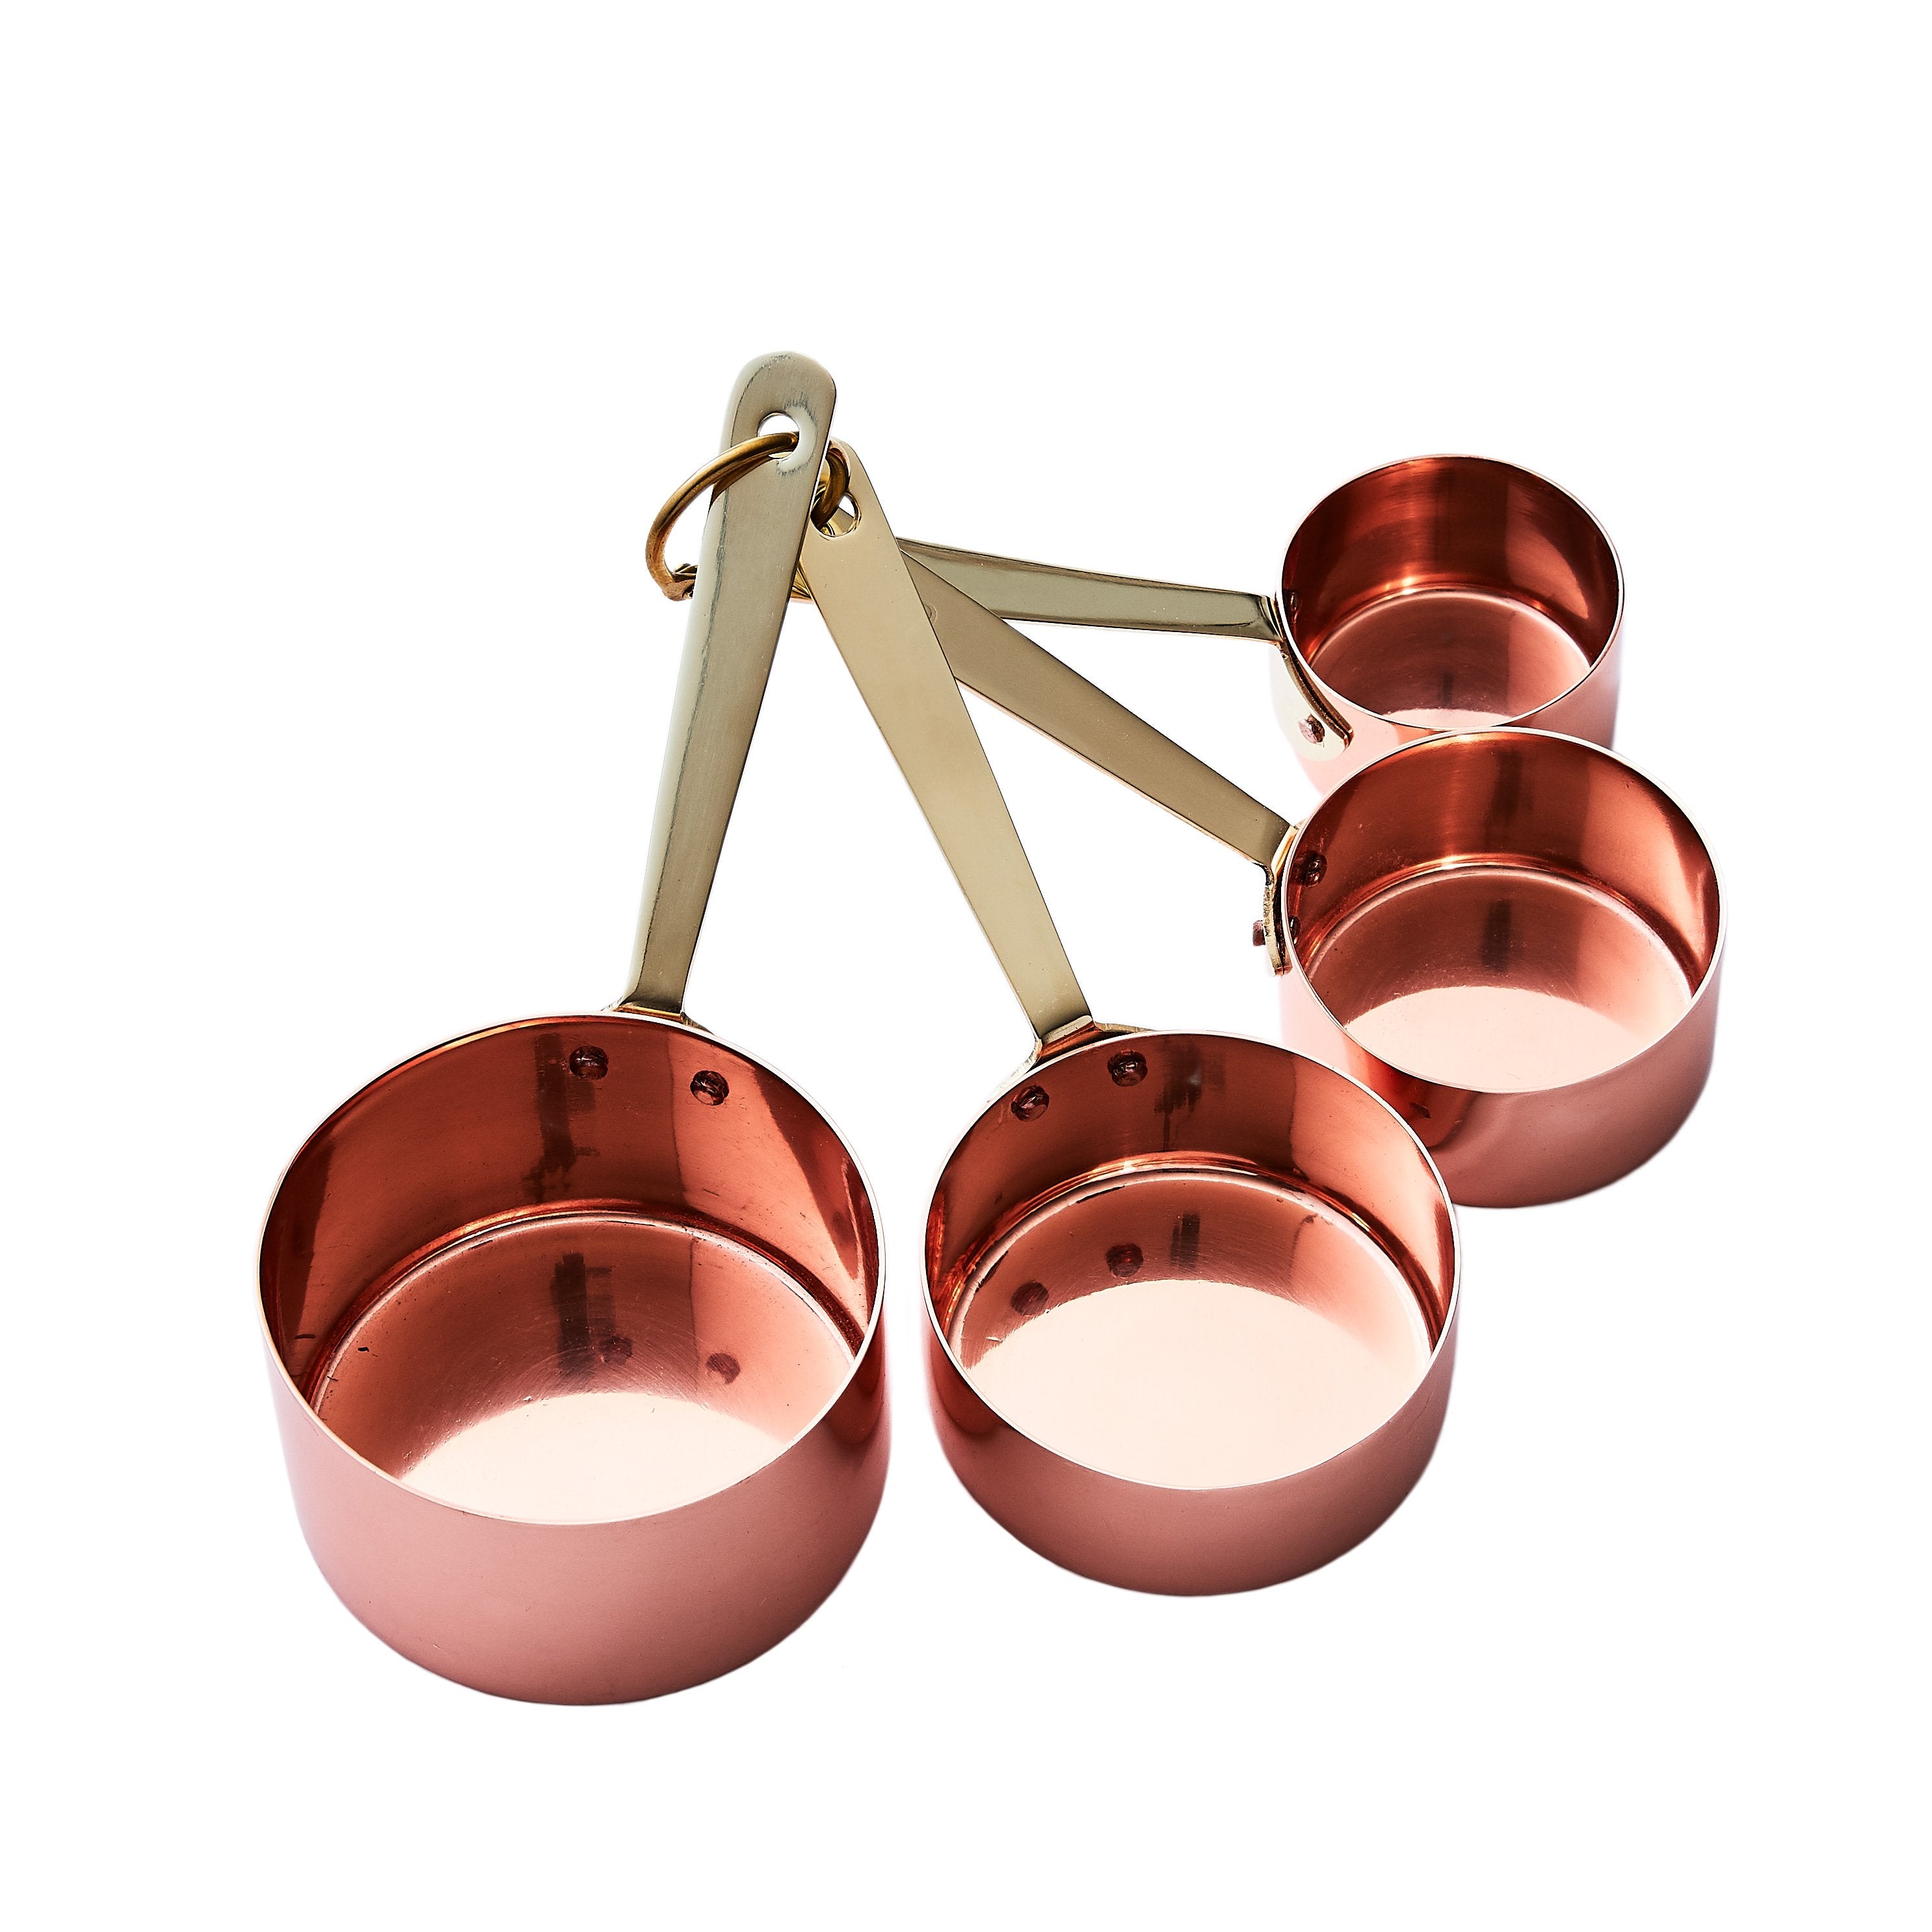 Sir Madam Copper & Brass Measuring Spoons & Cups Set - 2Modern